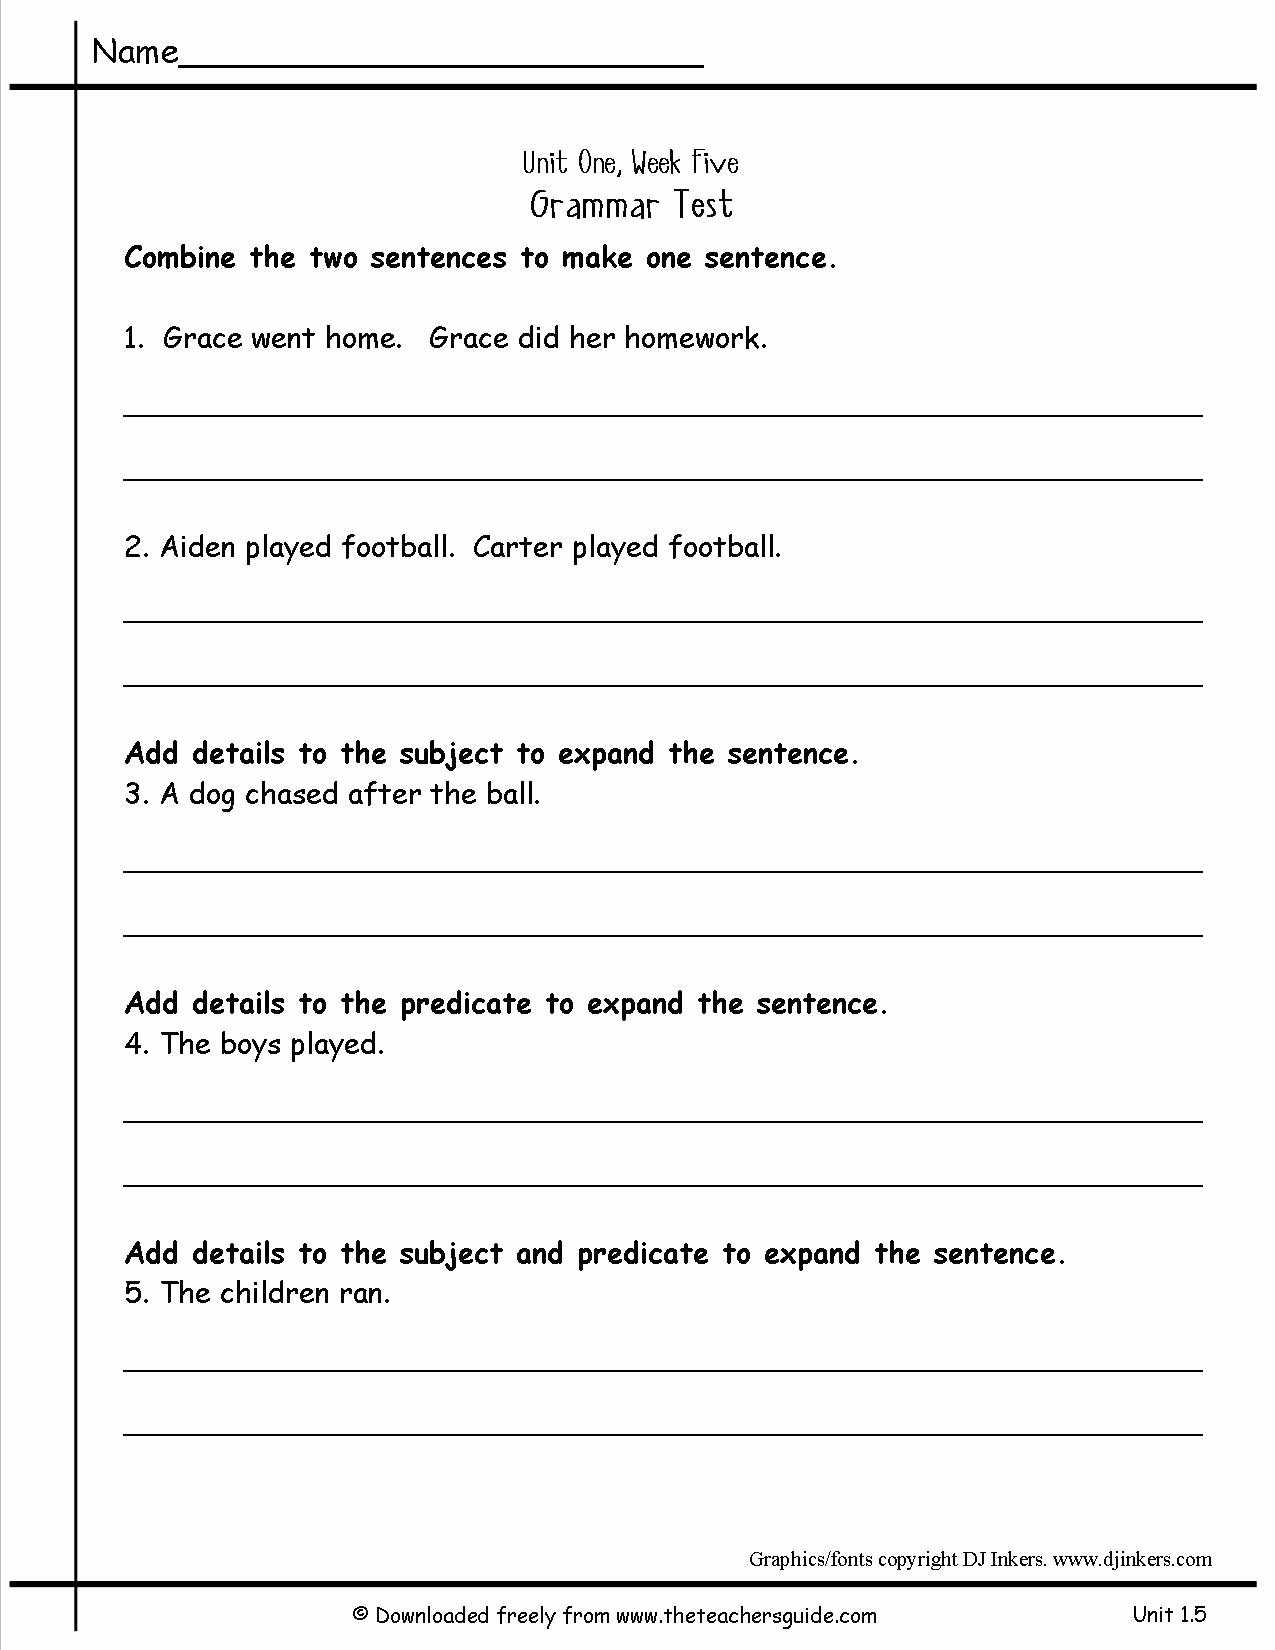 Combining Sentences Worksheets 5th Grade Awesome 20 Bining Sentences Worksheets 5th Grade